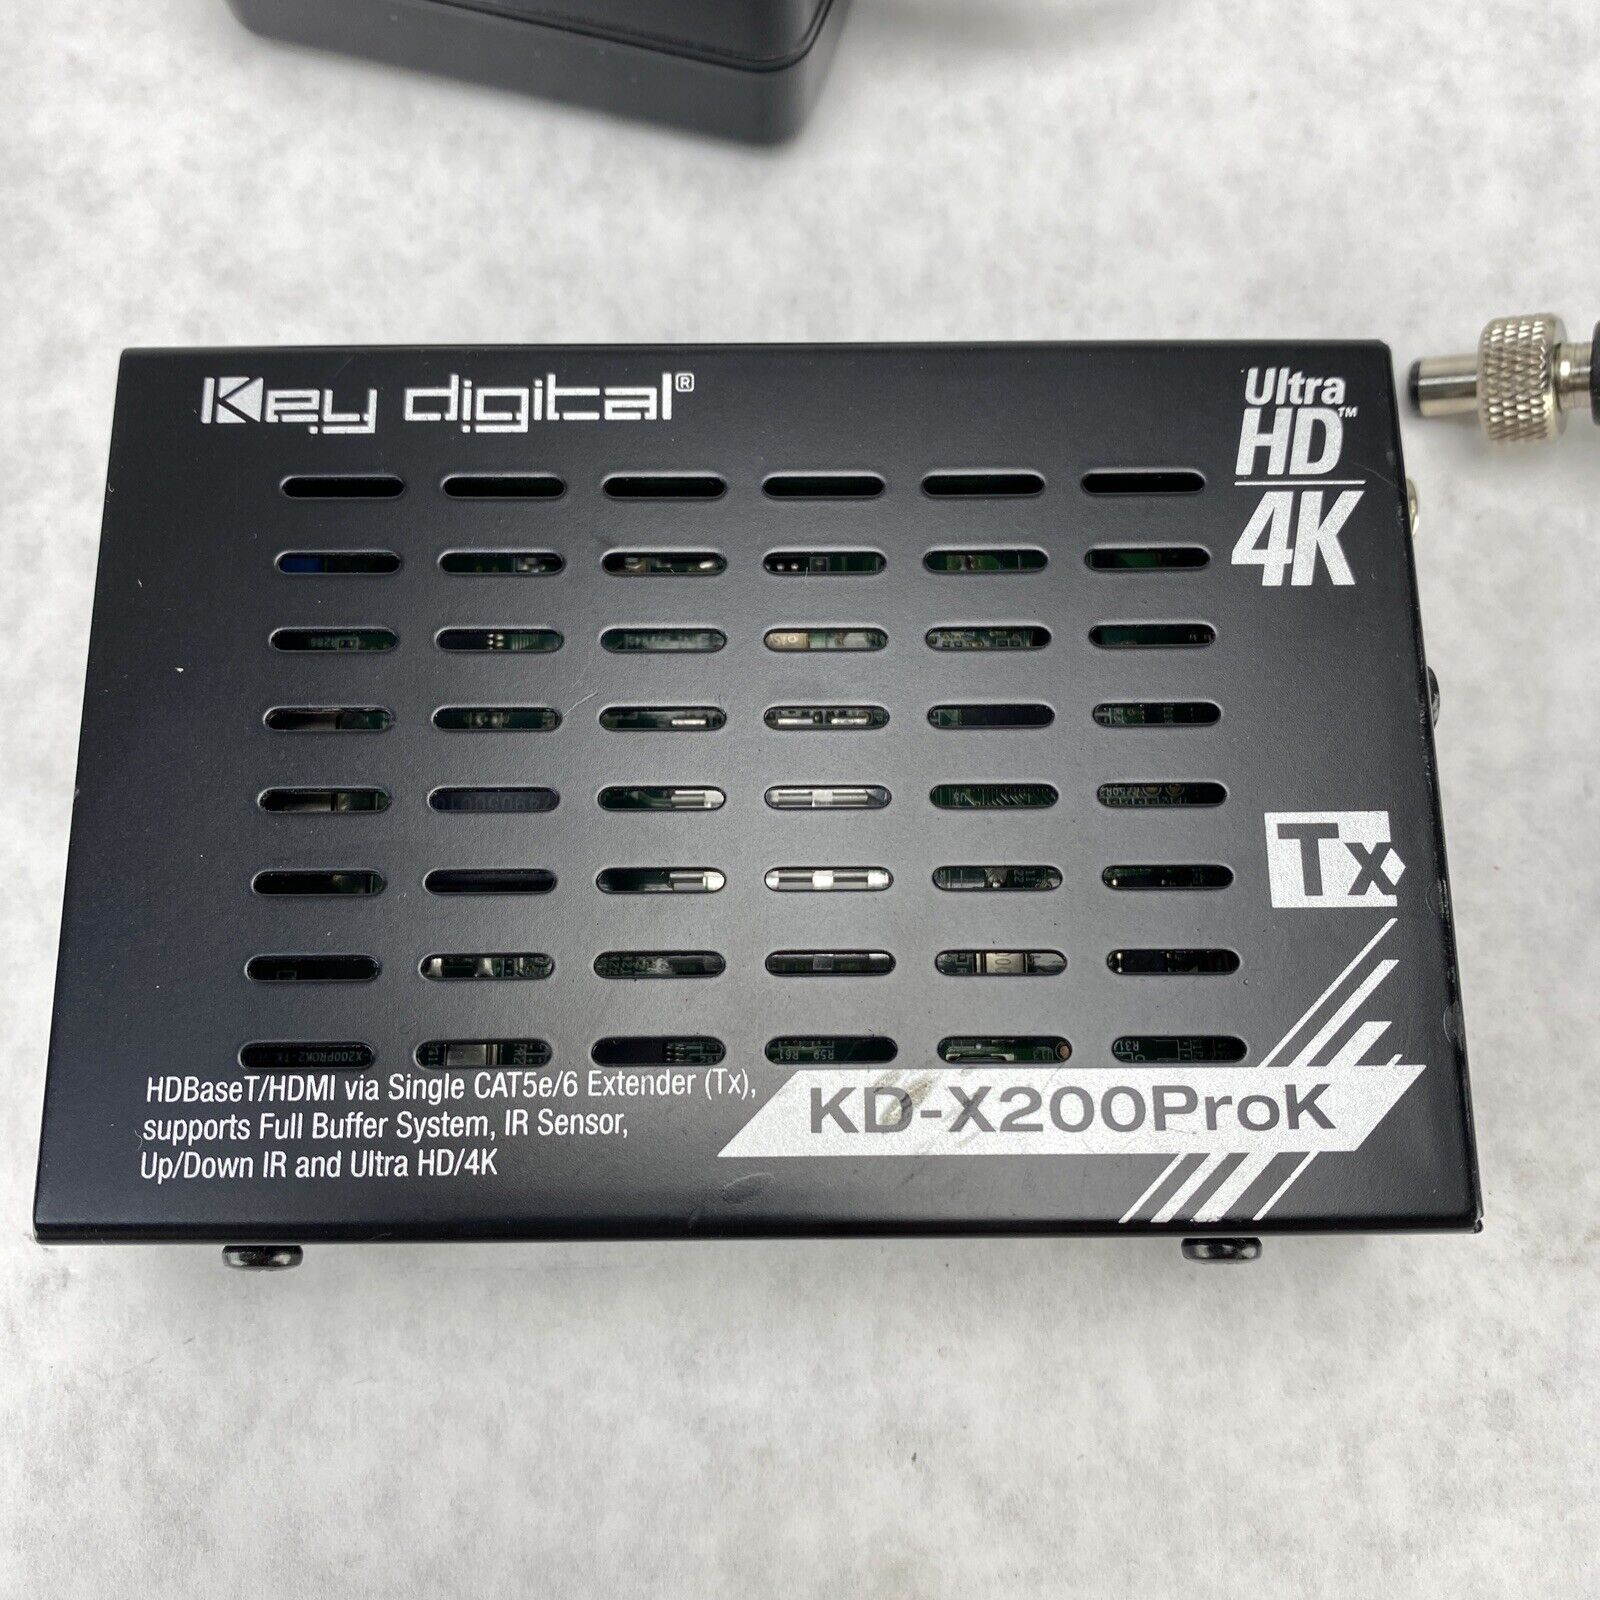 KeyDigital KD-X200ProK HDBaseT/HDMI Single CAT5e/6 TRANSCEIVER ONLY